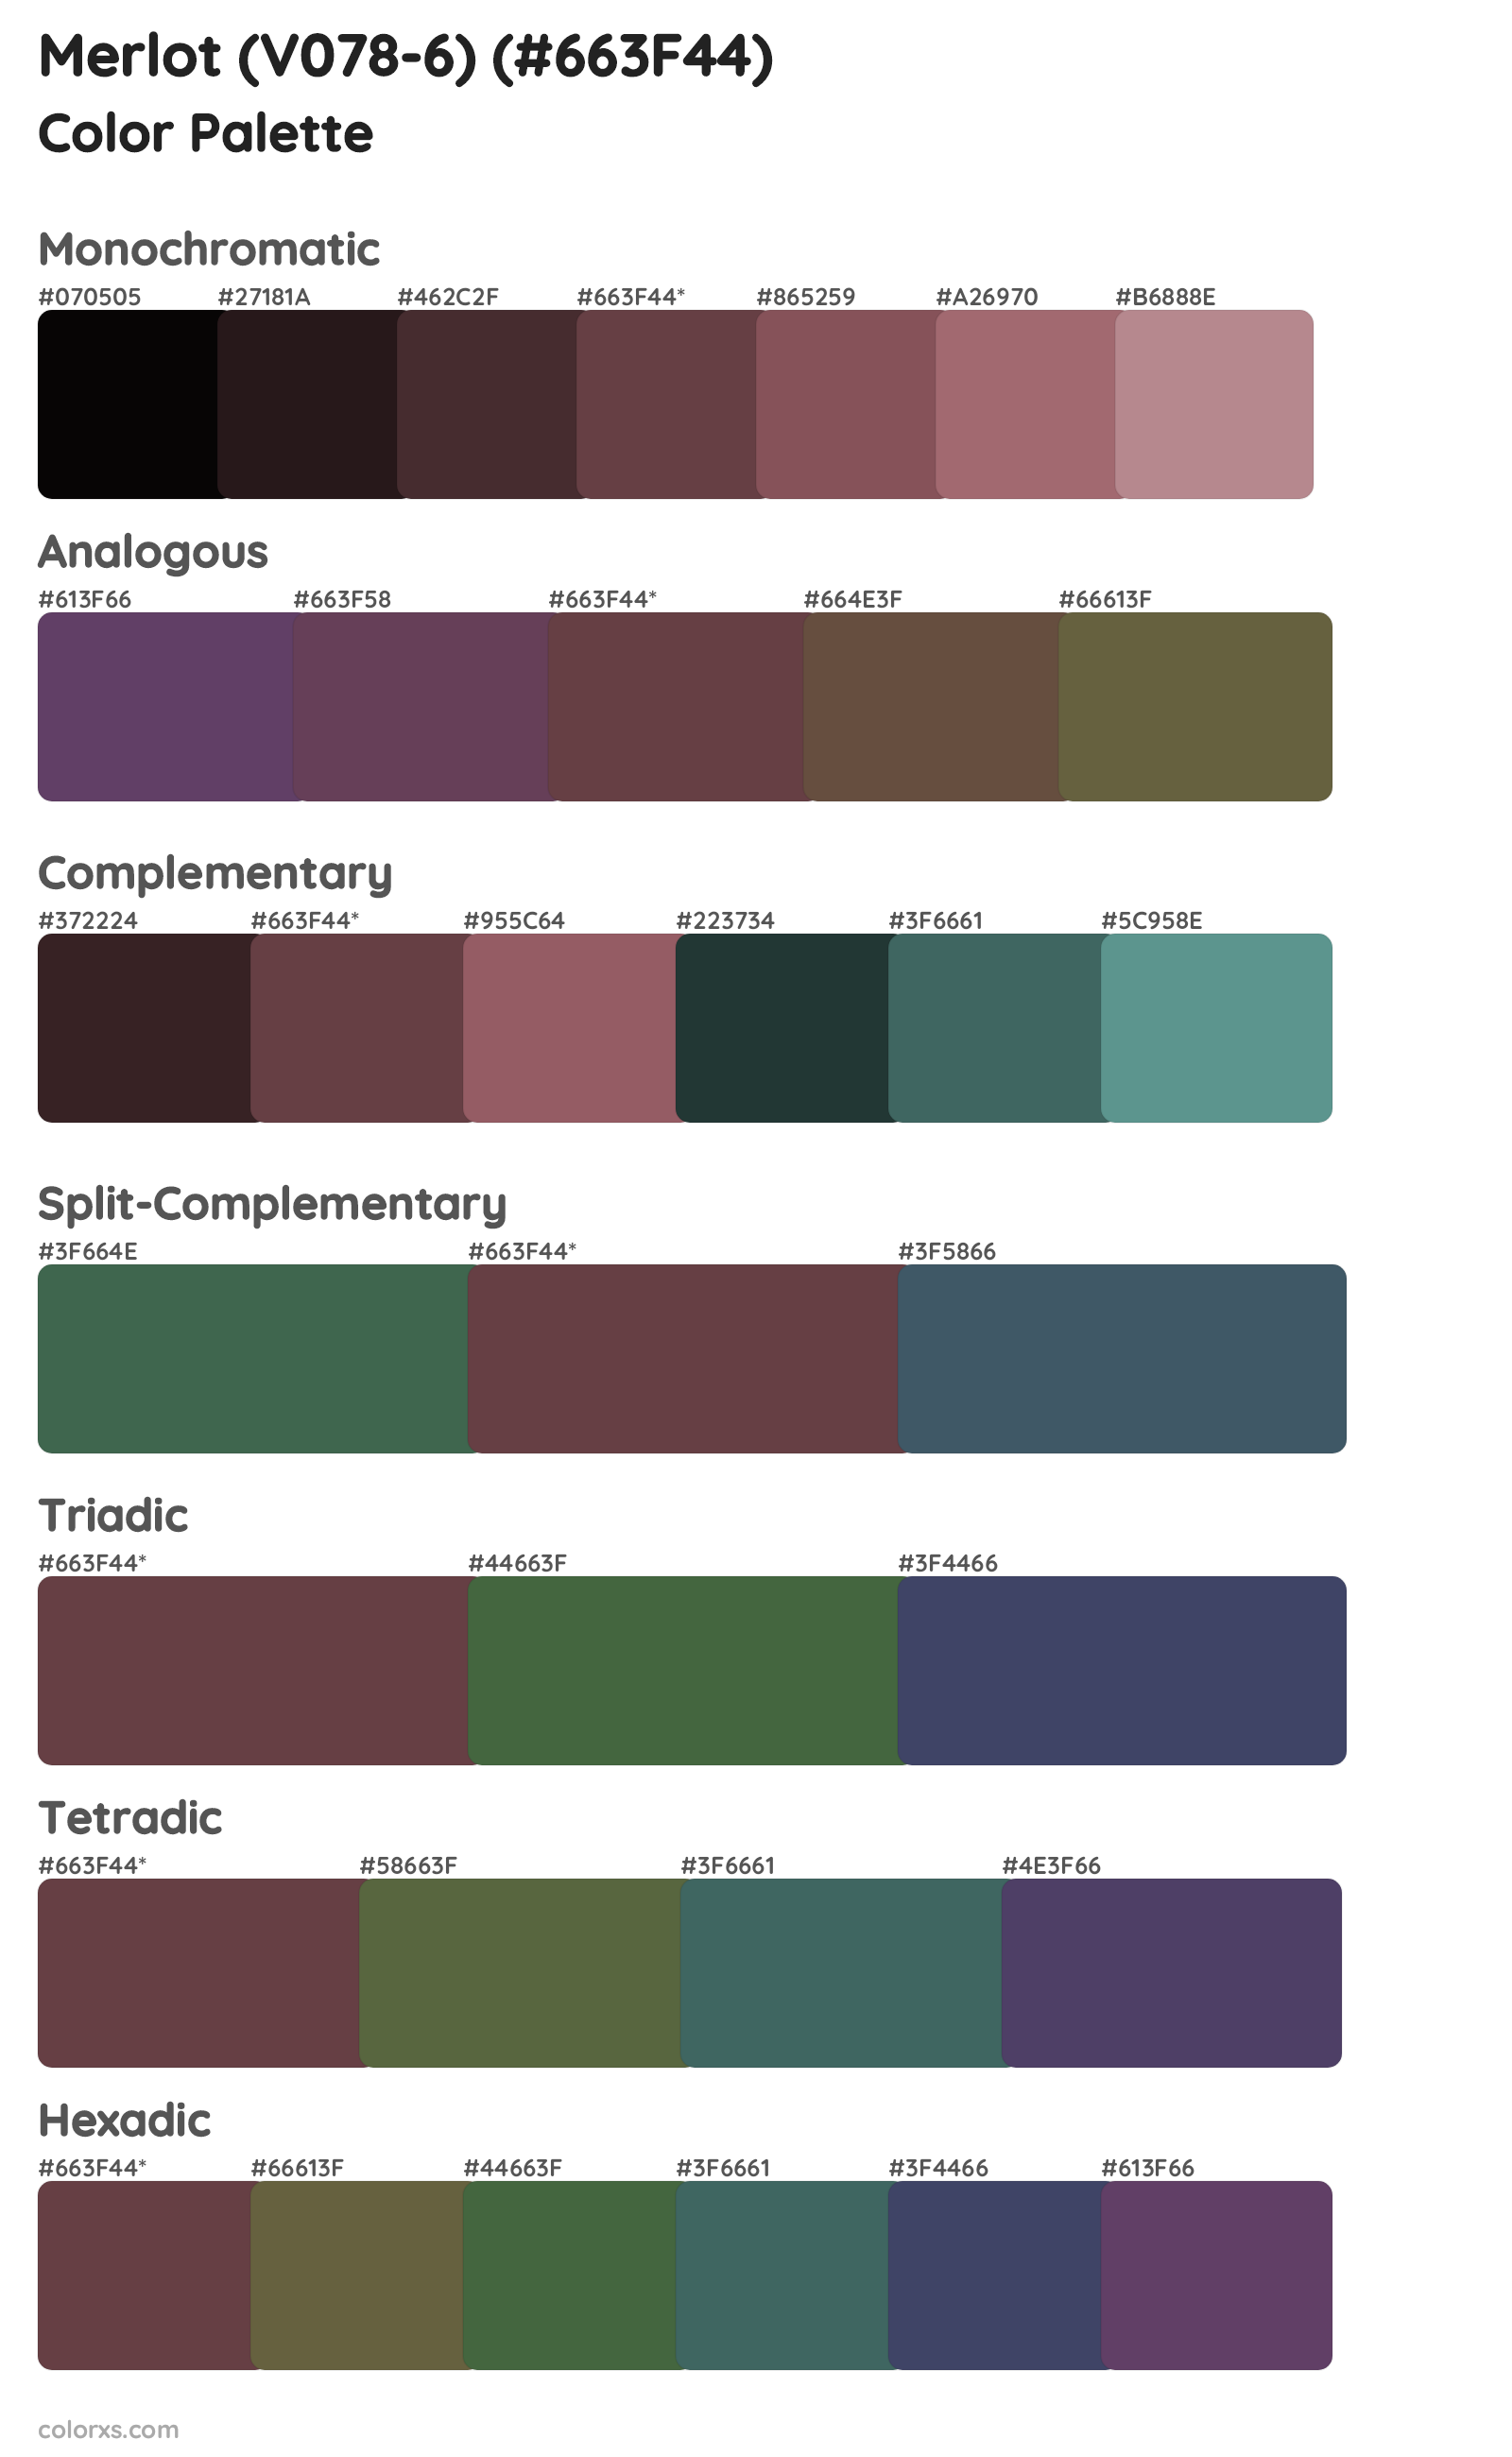 Merlot (V078-6) Color Scheme Palettes